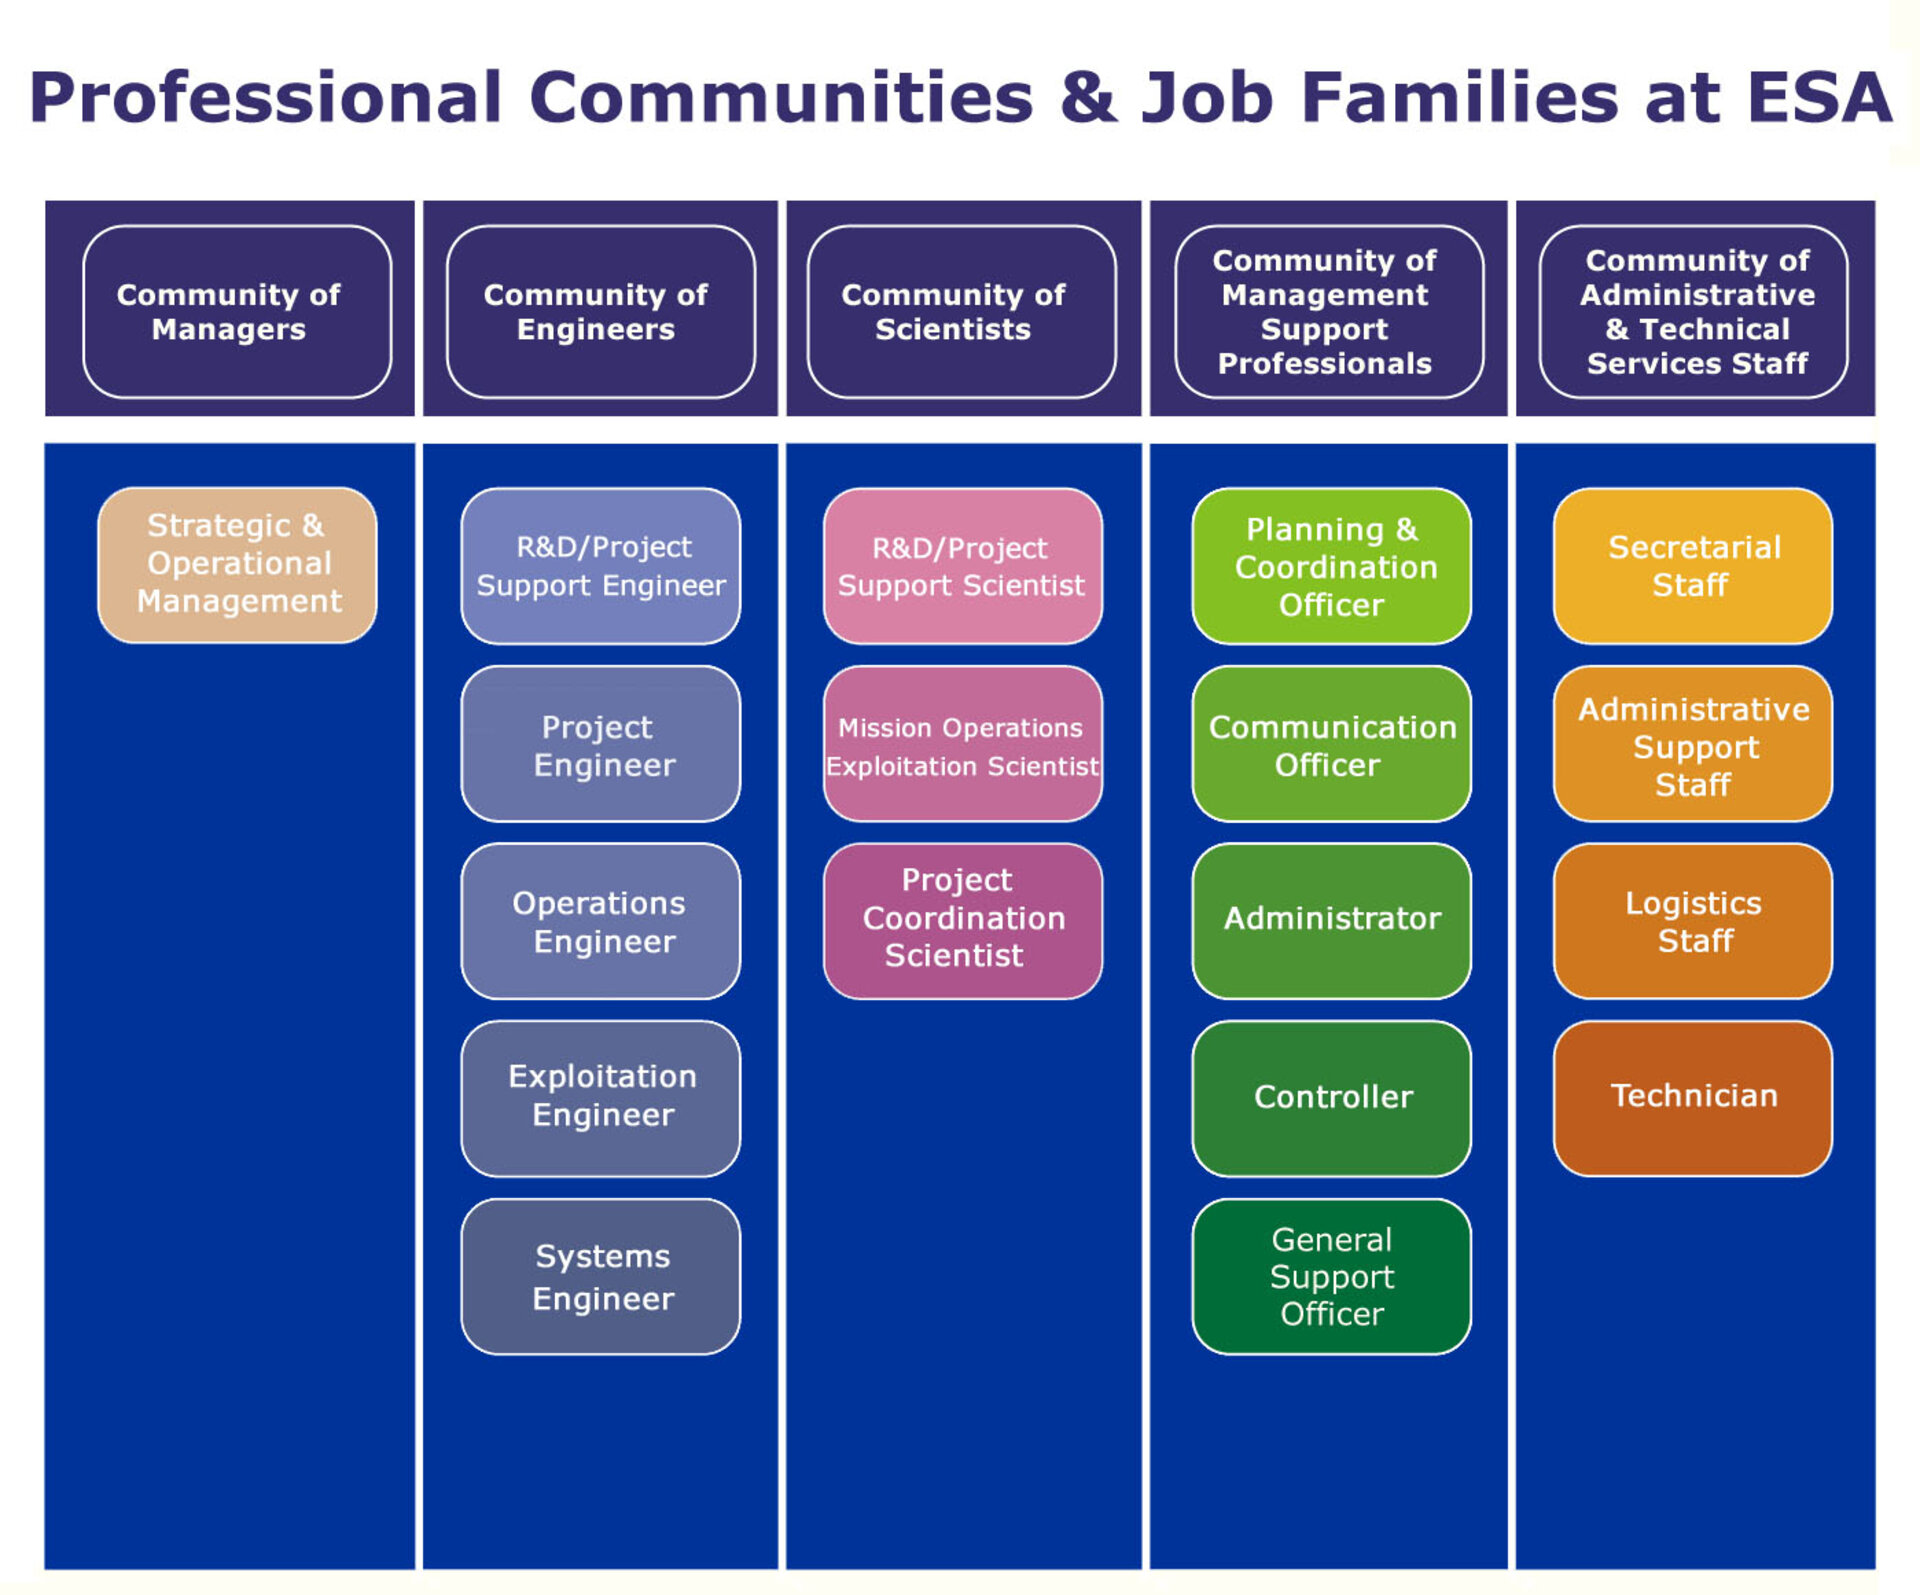 Professional Communities and Job Families at ESA